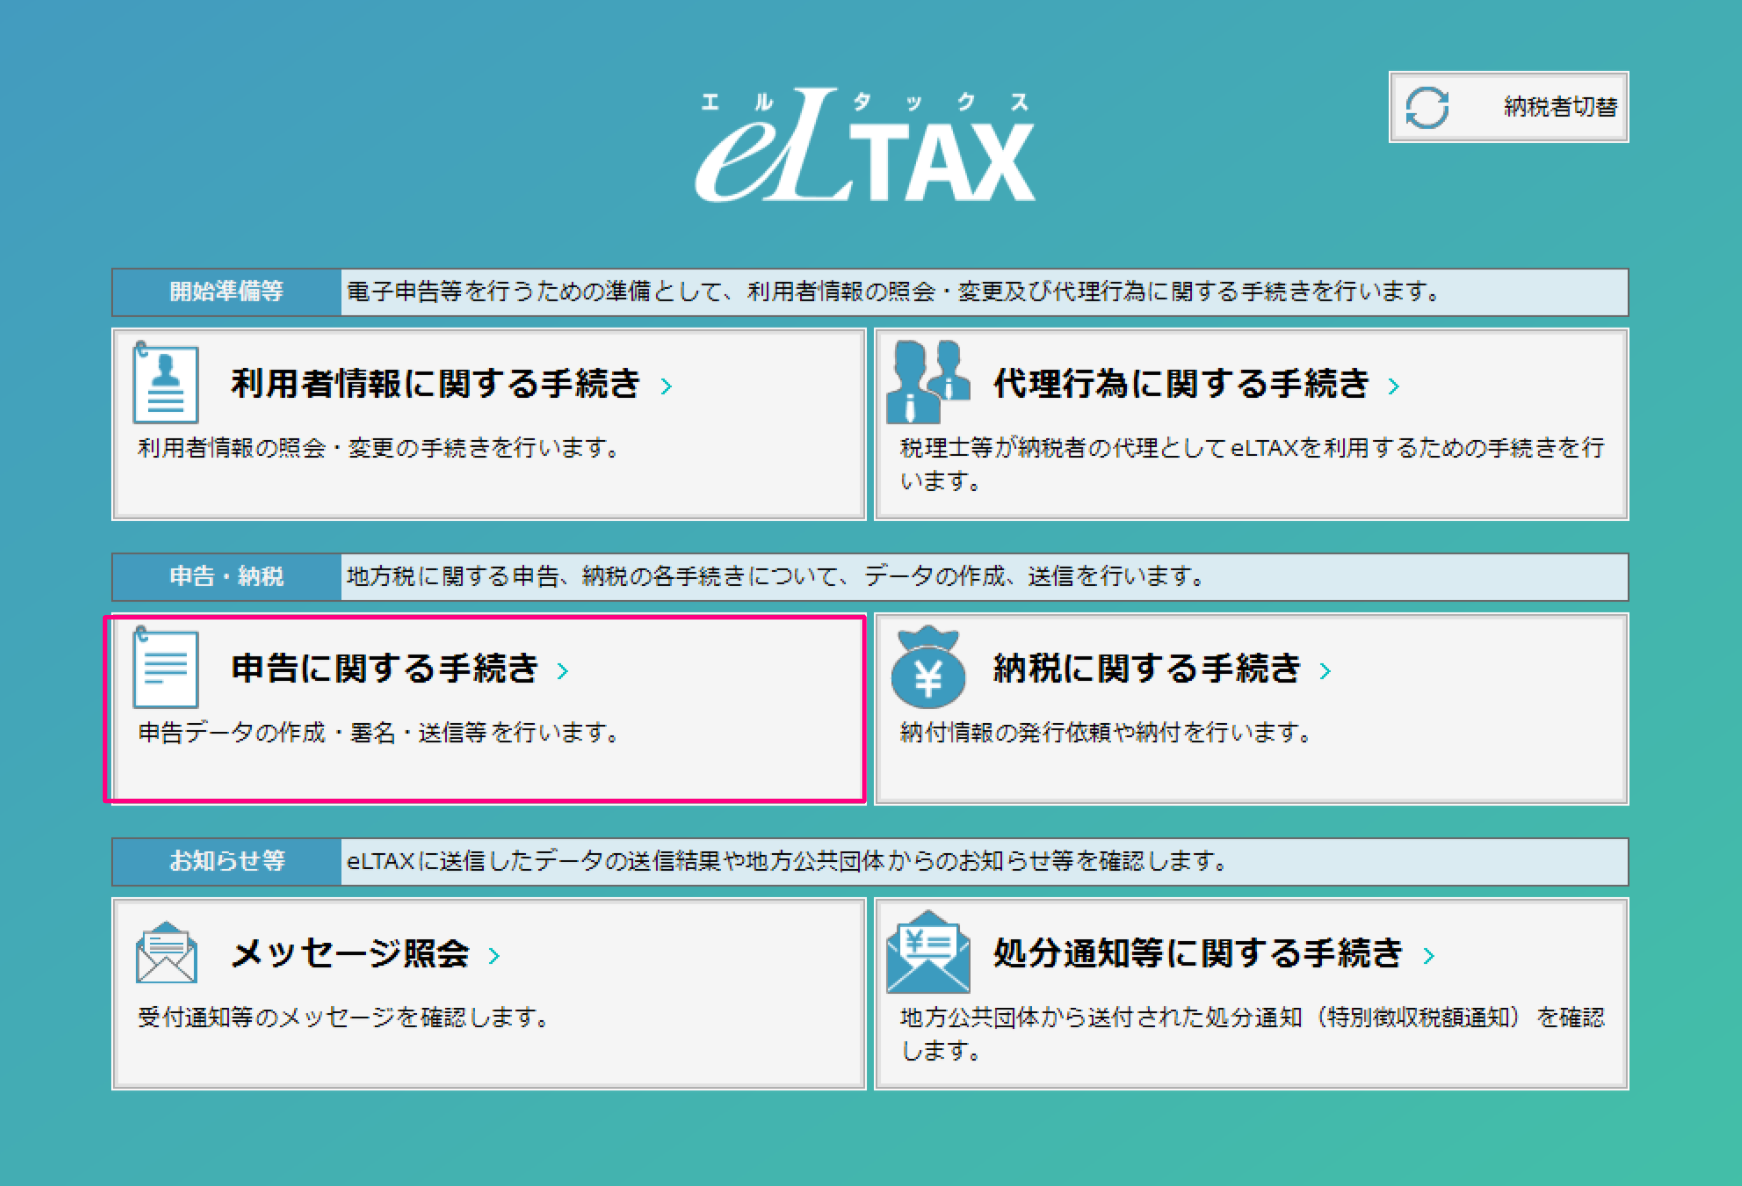 eltax画面で申告に関する手続きを指し示すスクリーンショット